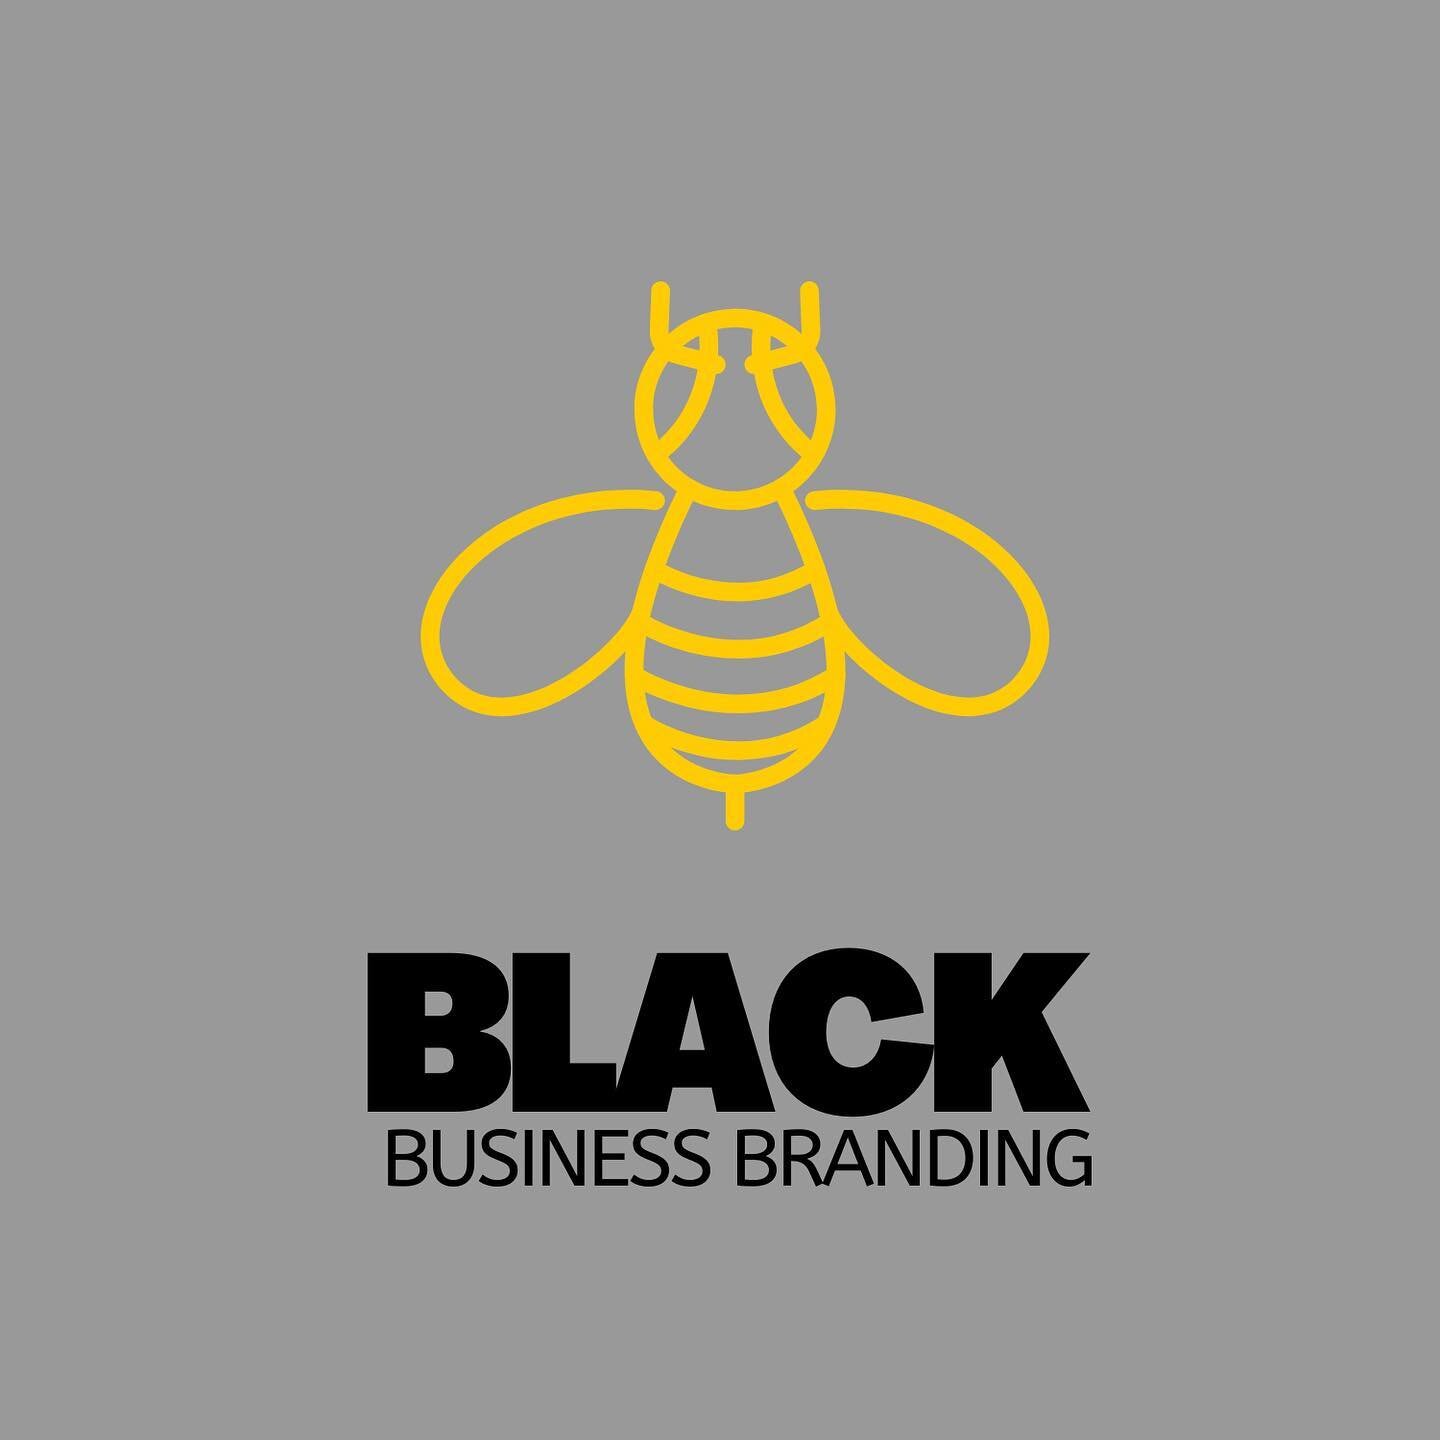 #blackbusinessbranding #brandblack